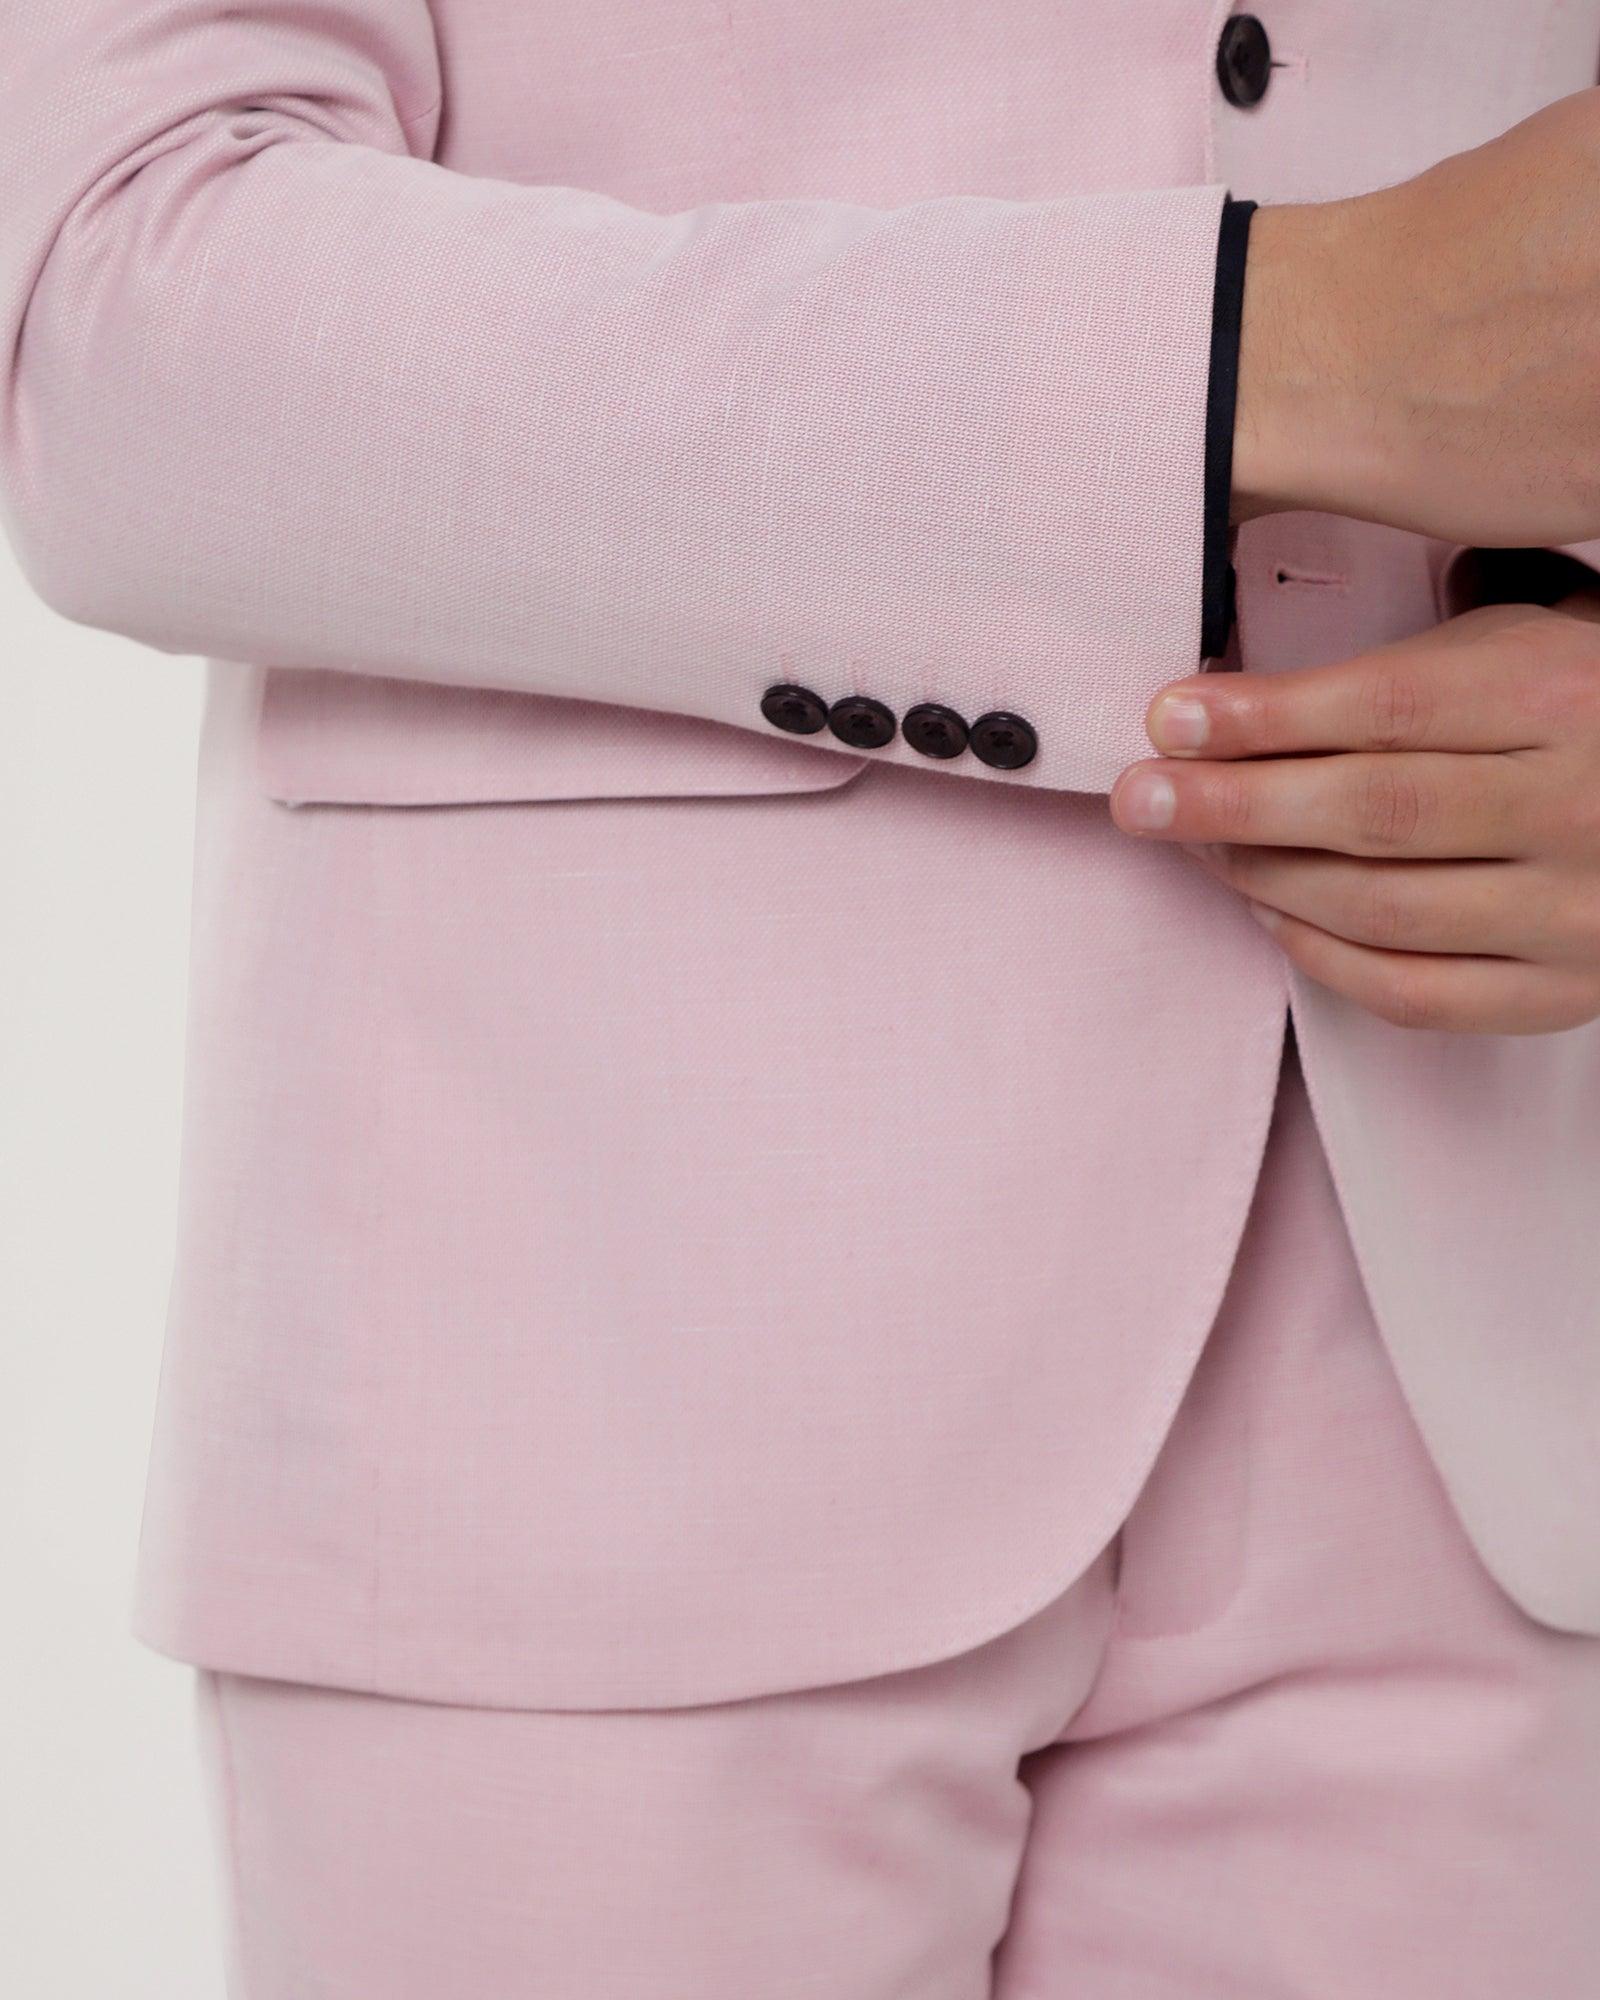 Linen Three Piece Pink Textured Formal Suit - Escott